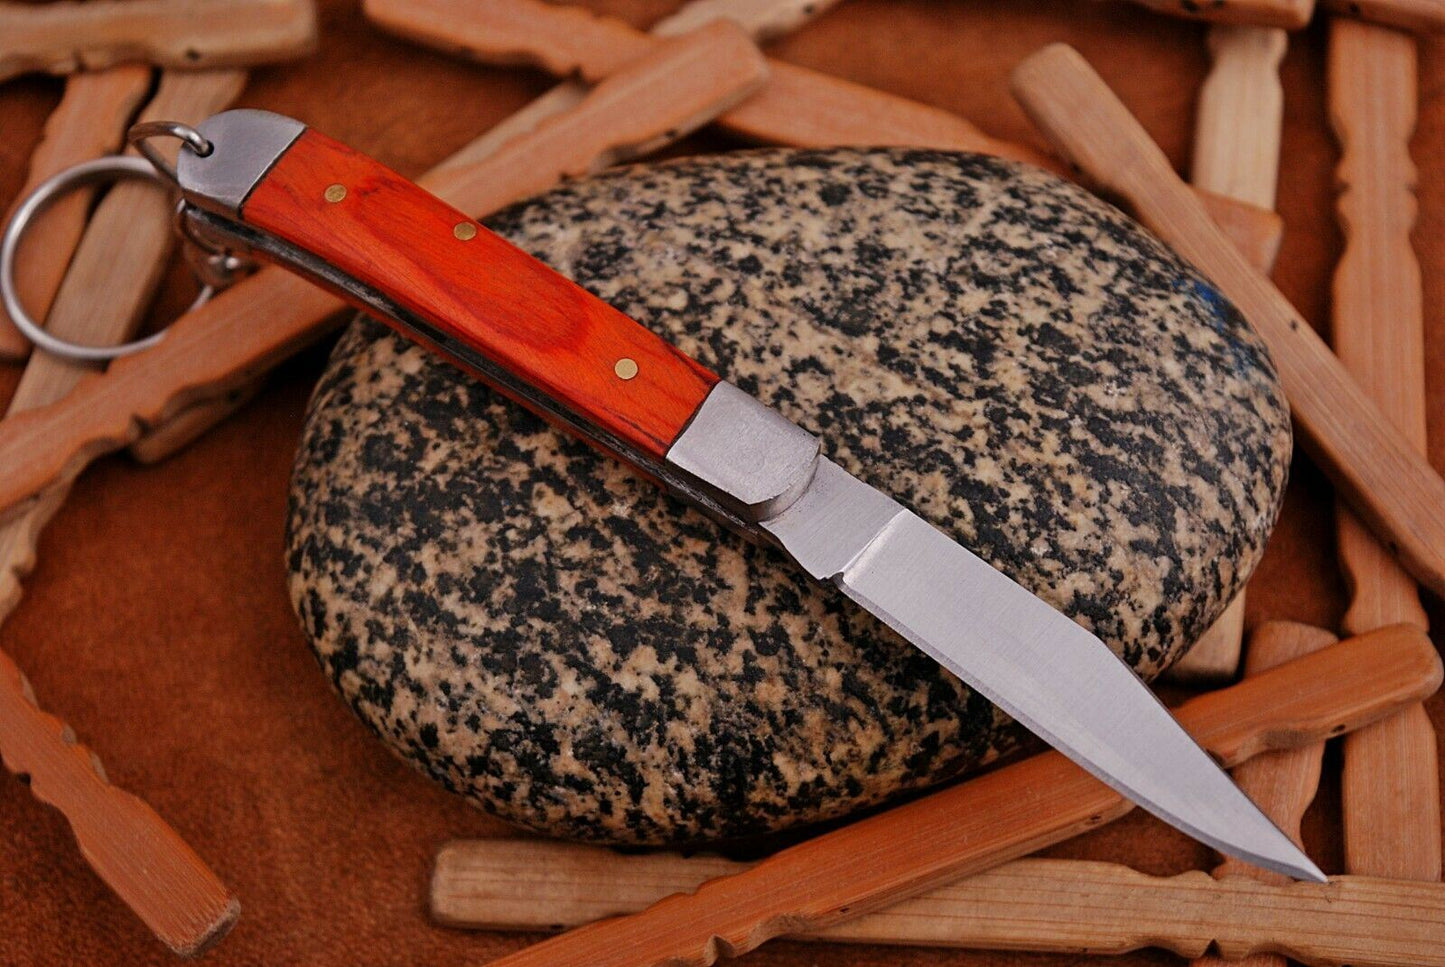 Mini Trapper Handmade Steel Folding Pocket Key Chain Knife "Orange Wood Handle"